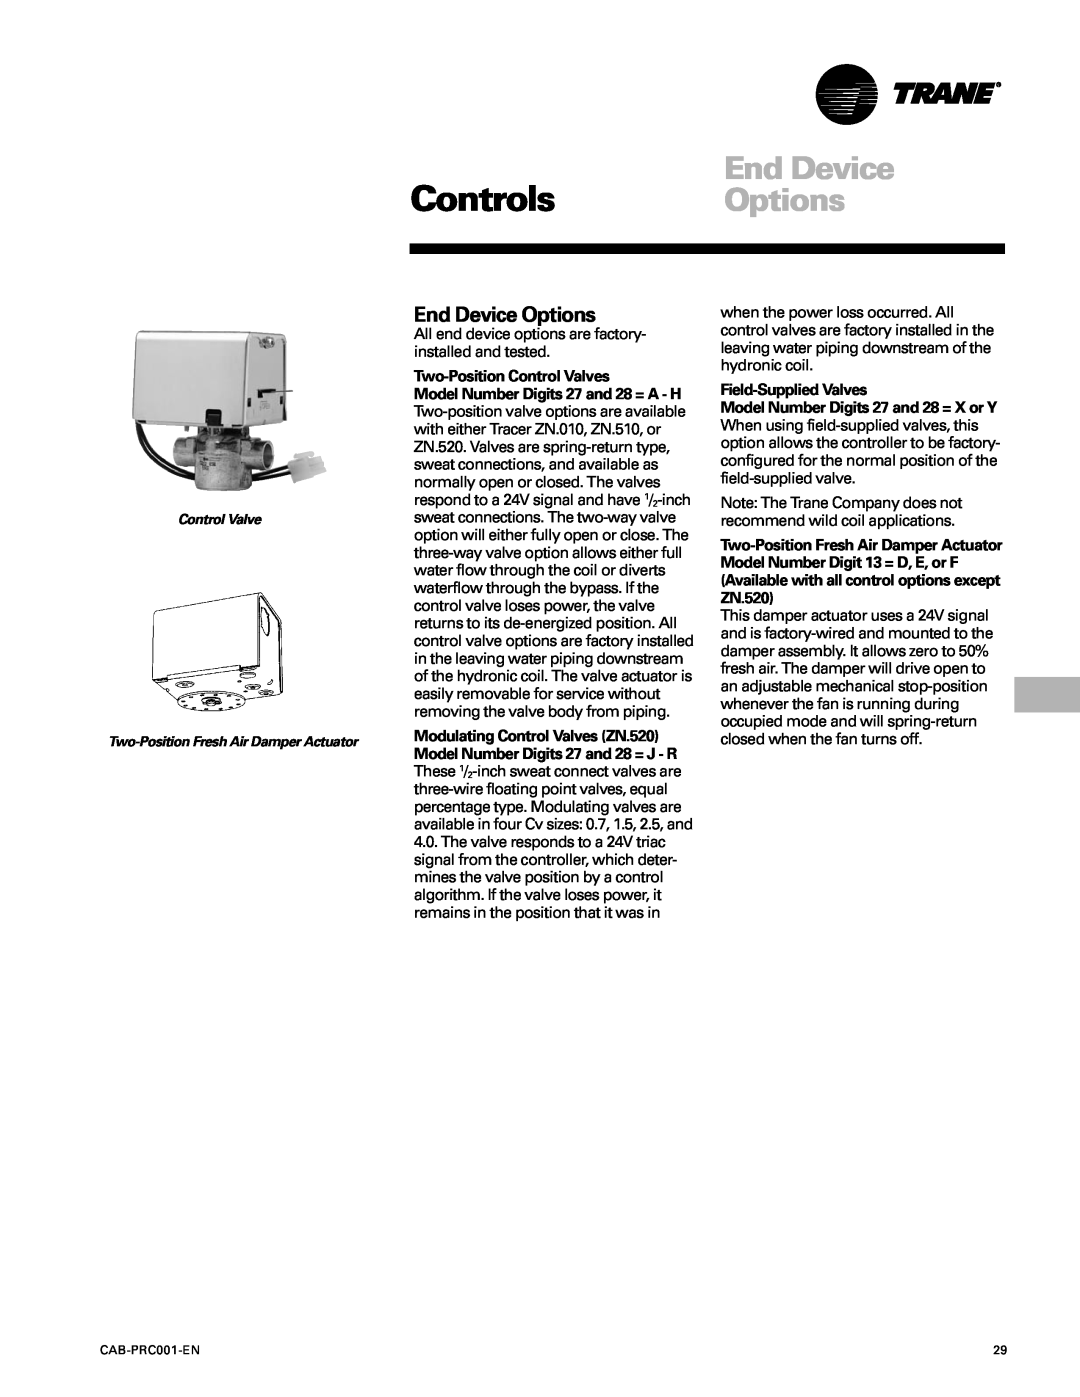 Trane CAB-PRC001-EN manual Controls Options, End Device Options 